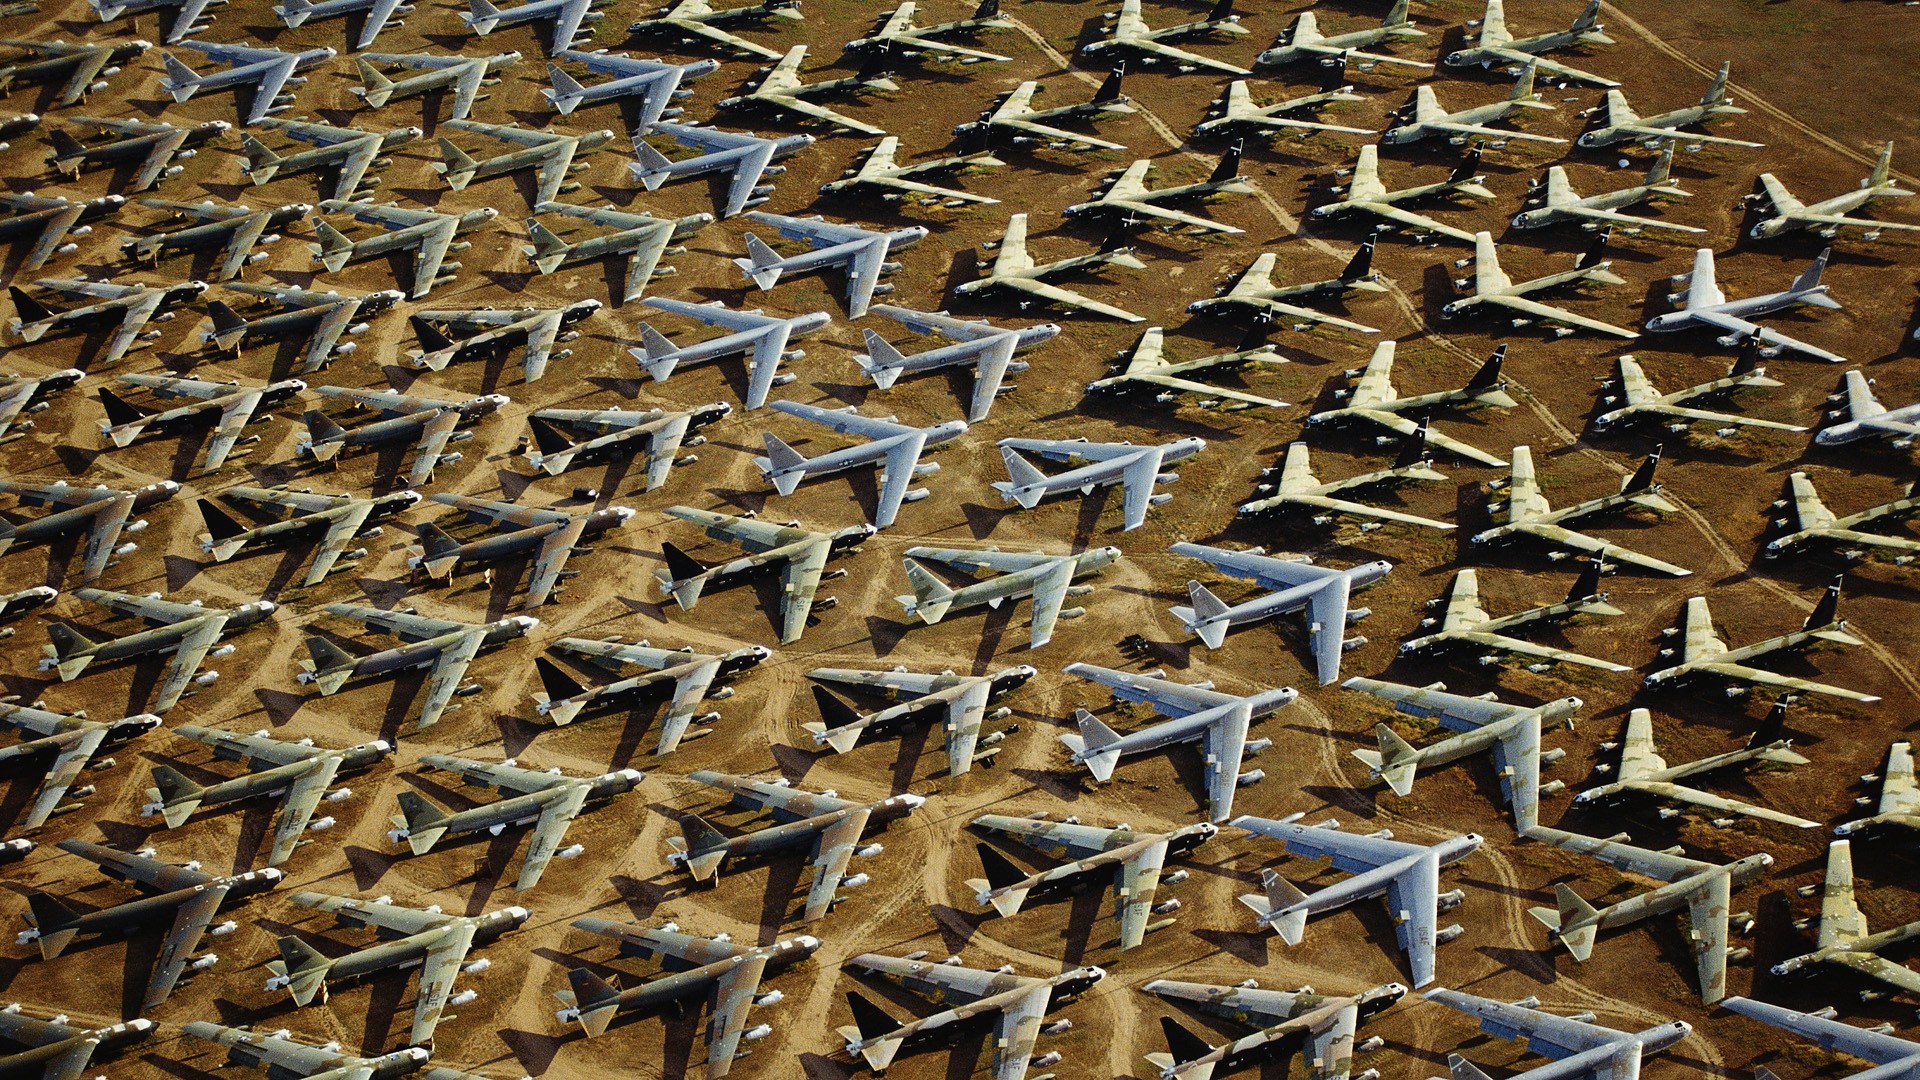 Arizona, B-52 Stratofortress, United States Air Force, air force, Bone Yard - desktop wallpaper